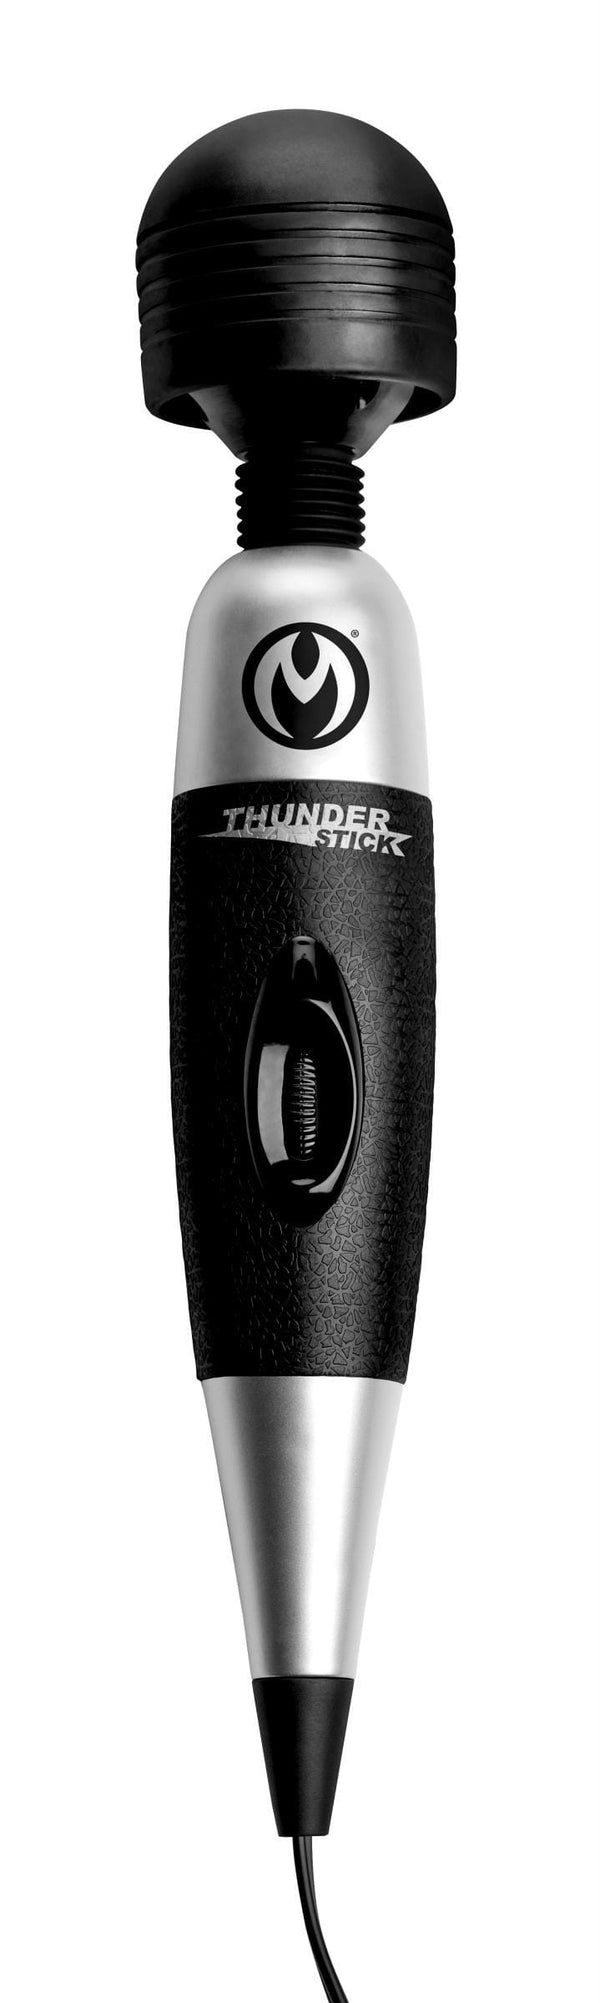 Thunderstick 2.0 Super Charged Power Wand - TFA